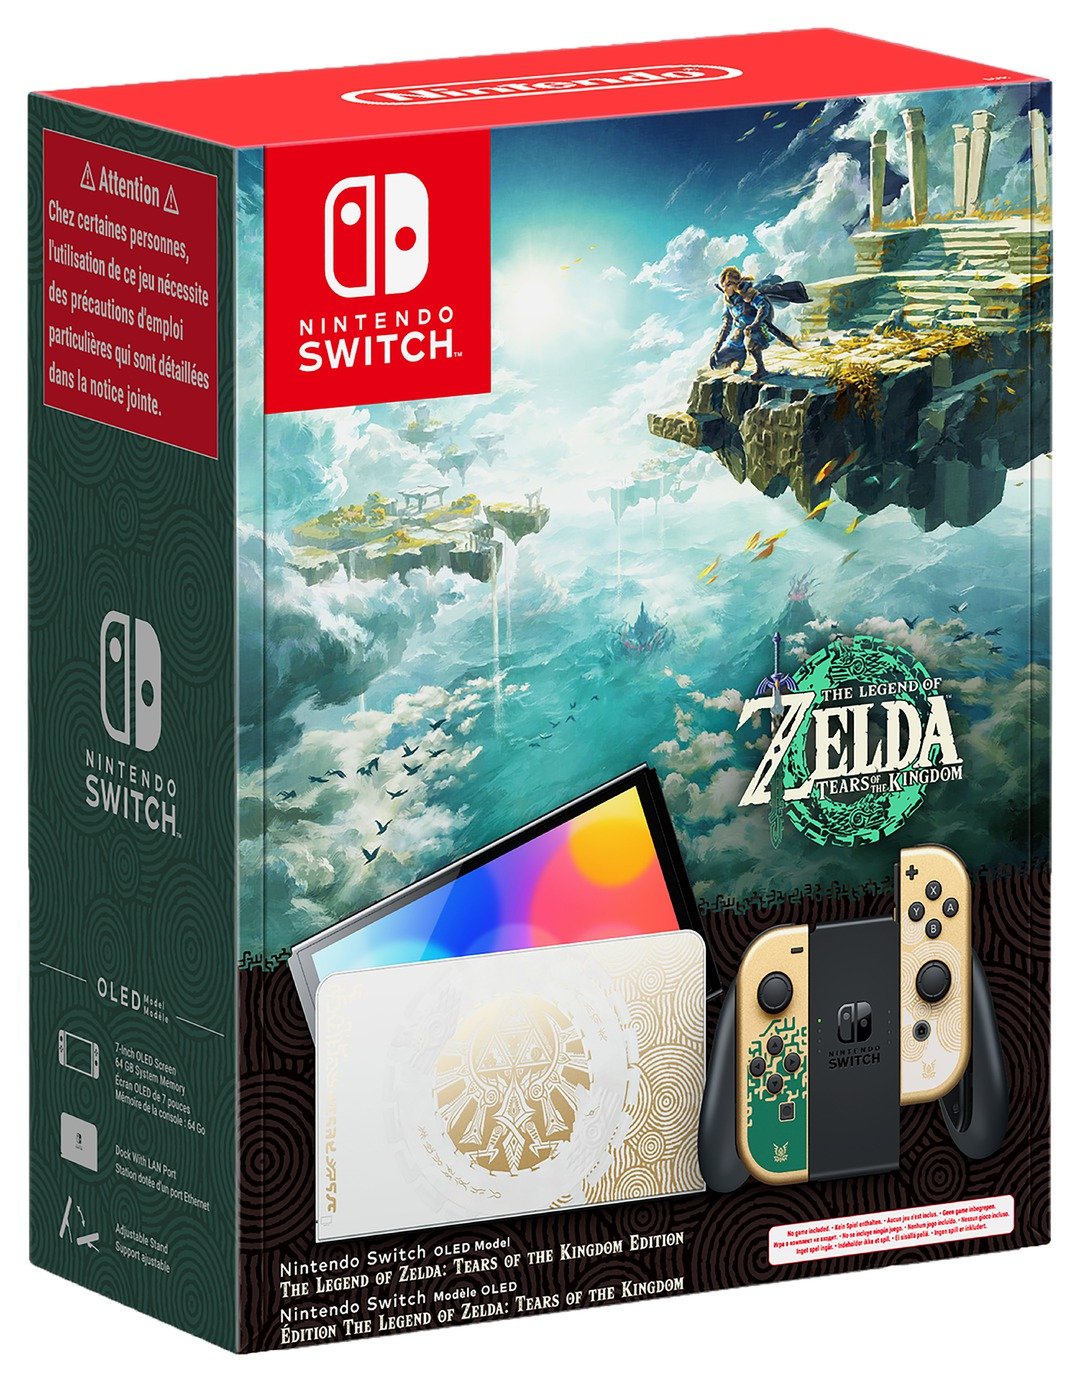 Nintendo Switch OLED Model Console - Zelda Edition